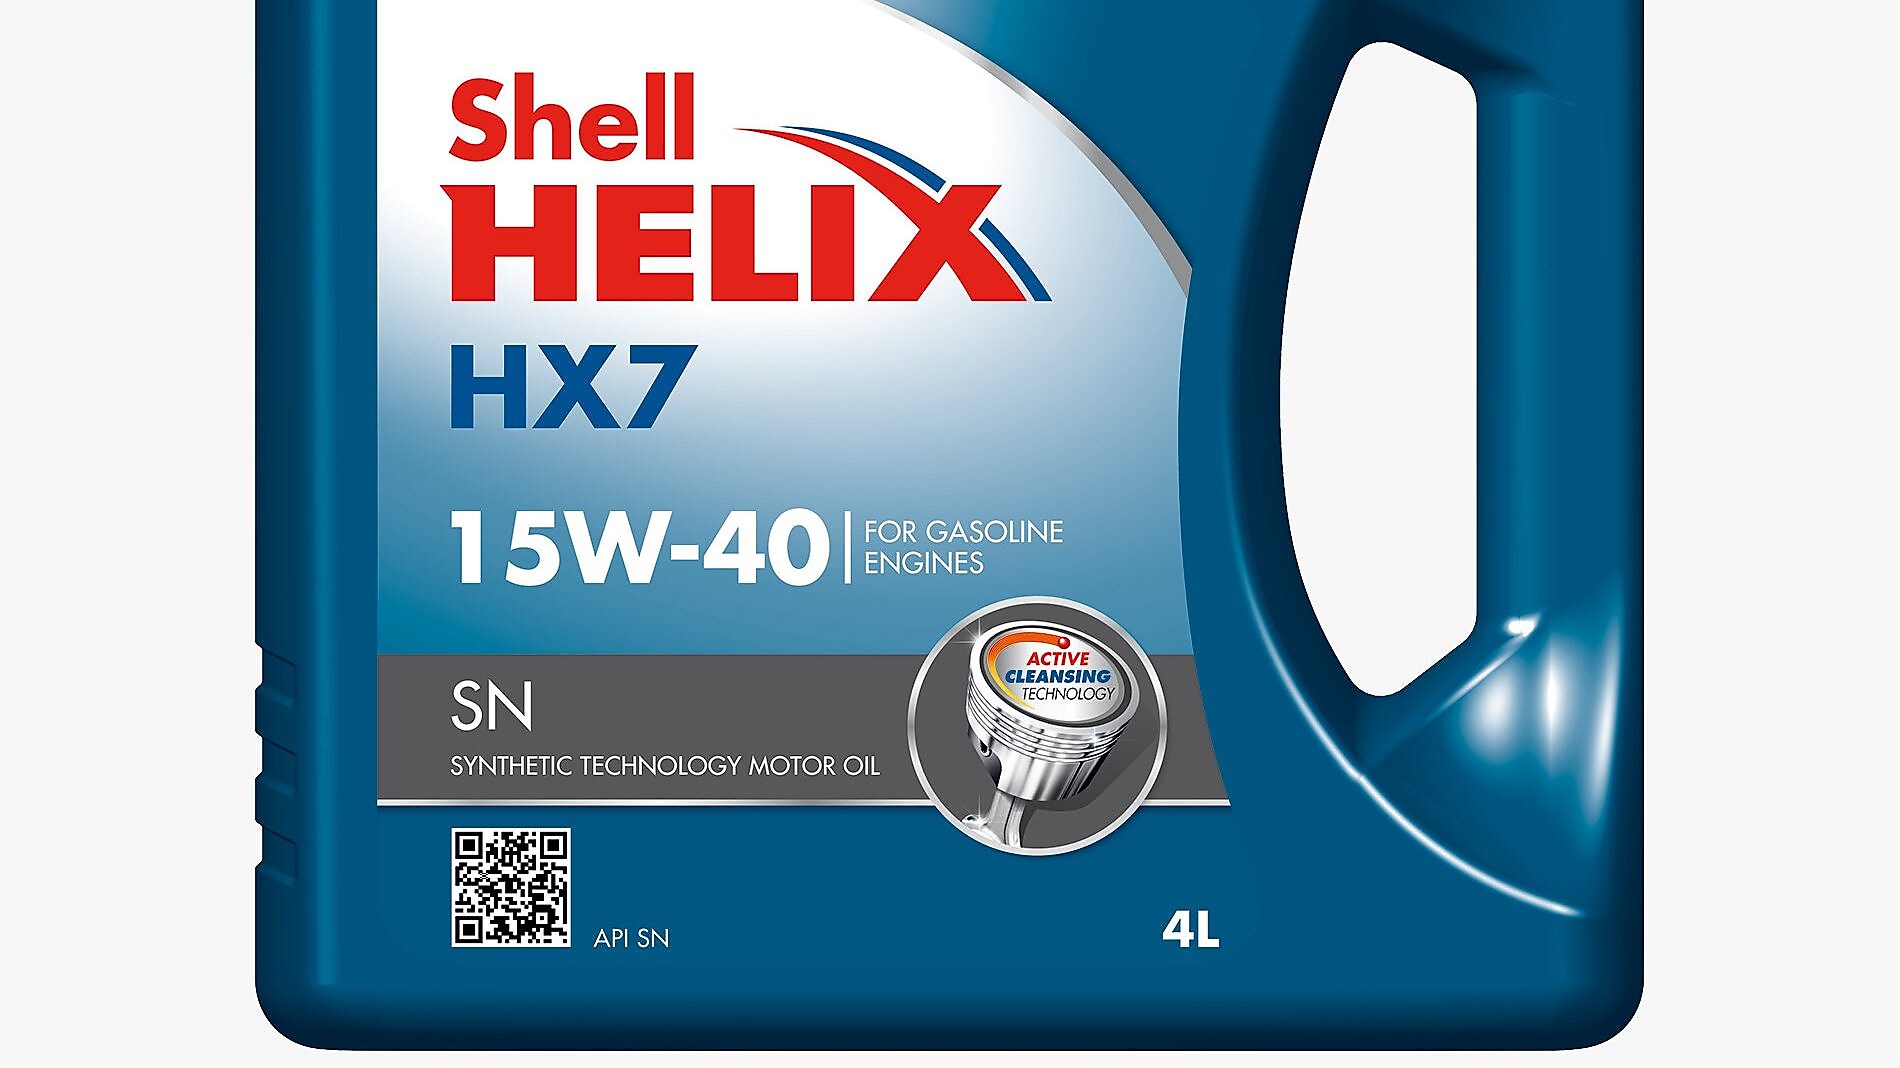 Shell Helix Ultra Diesel 5W-40  ¡Bienvenido a Shell República Dominicana!  Dominican Republic